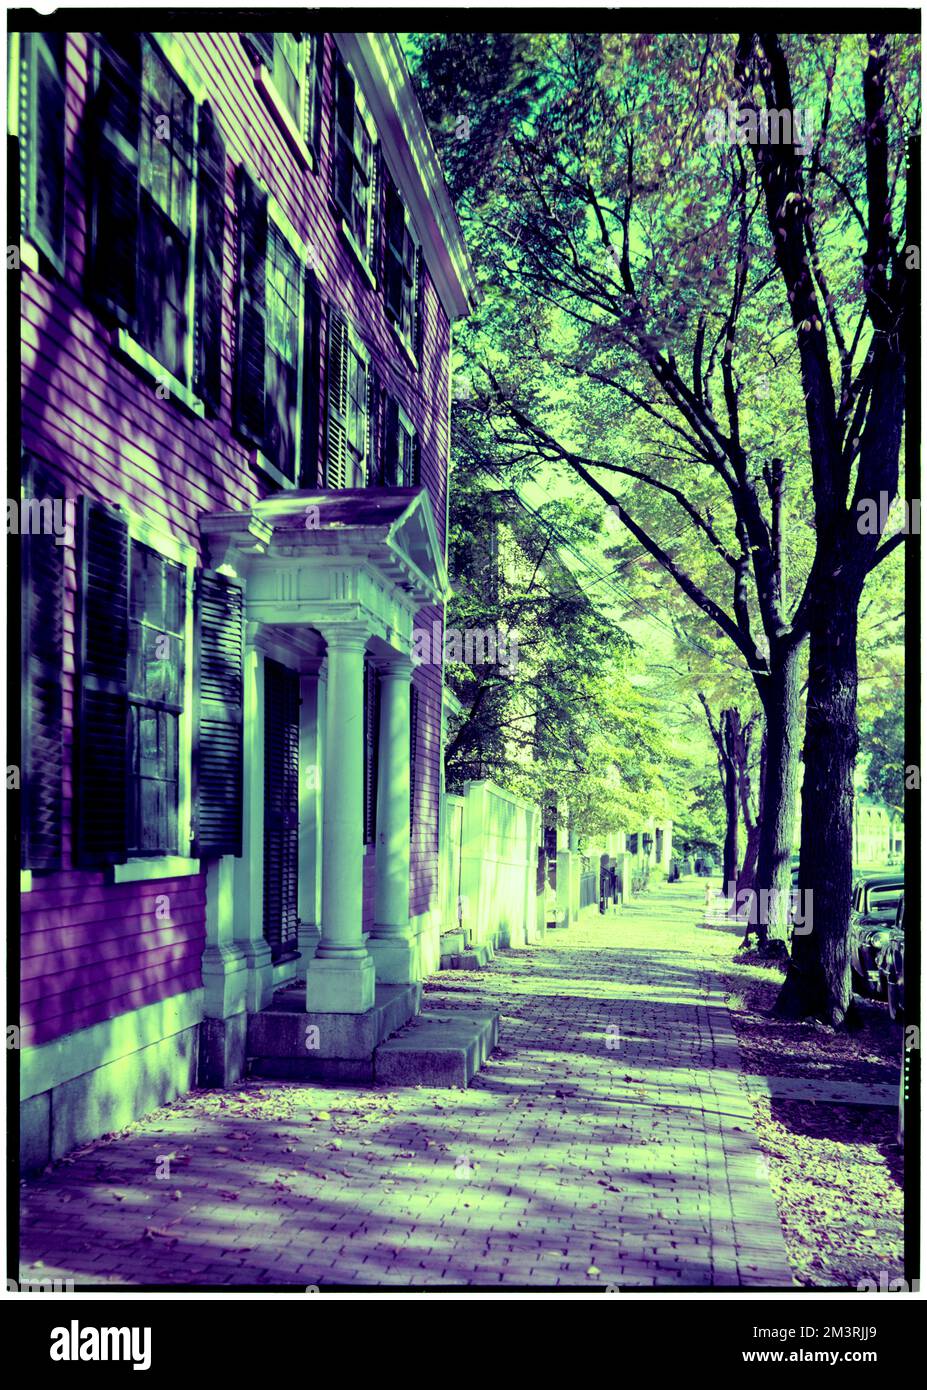 Salem, autumn , Architecture, Dwellings, Sidewalks. Samuel Chamberlain Photograph Negatives Collection Stock Photo